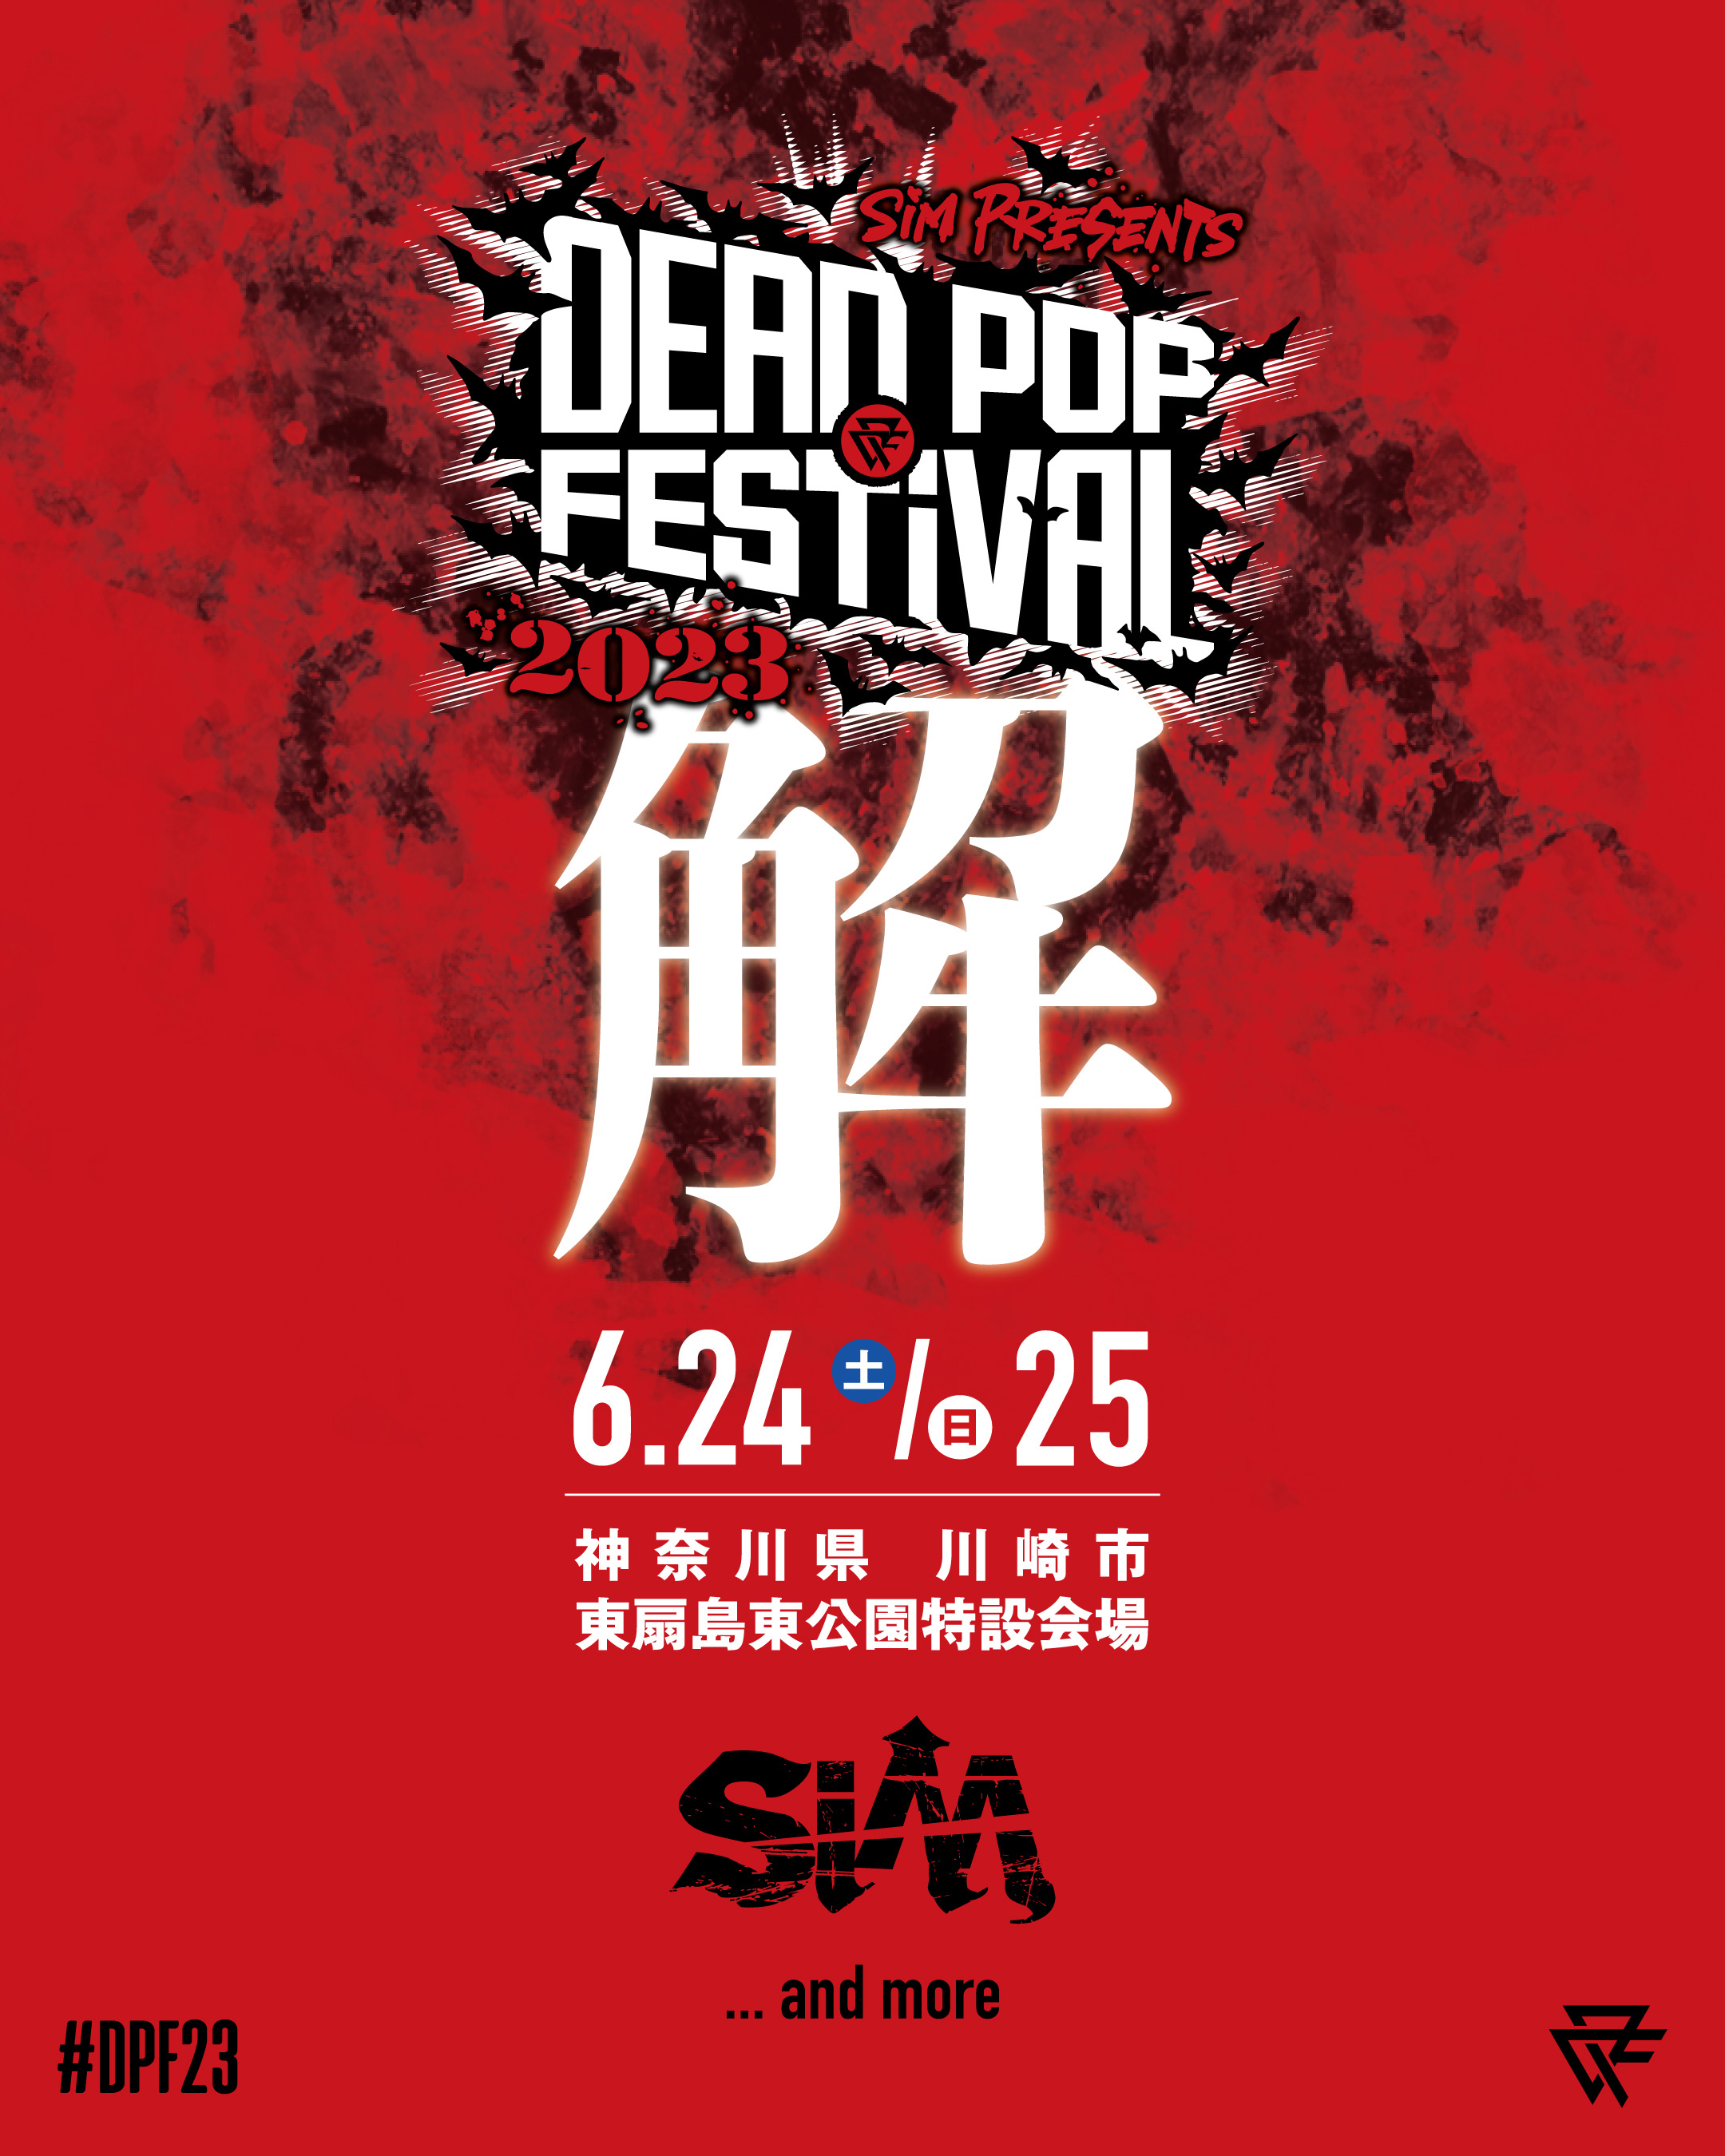 DEAD POP FESTiVAL Official Website